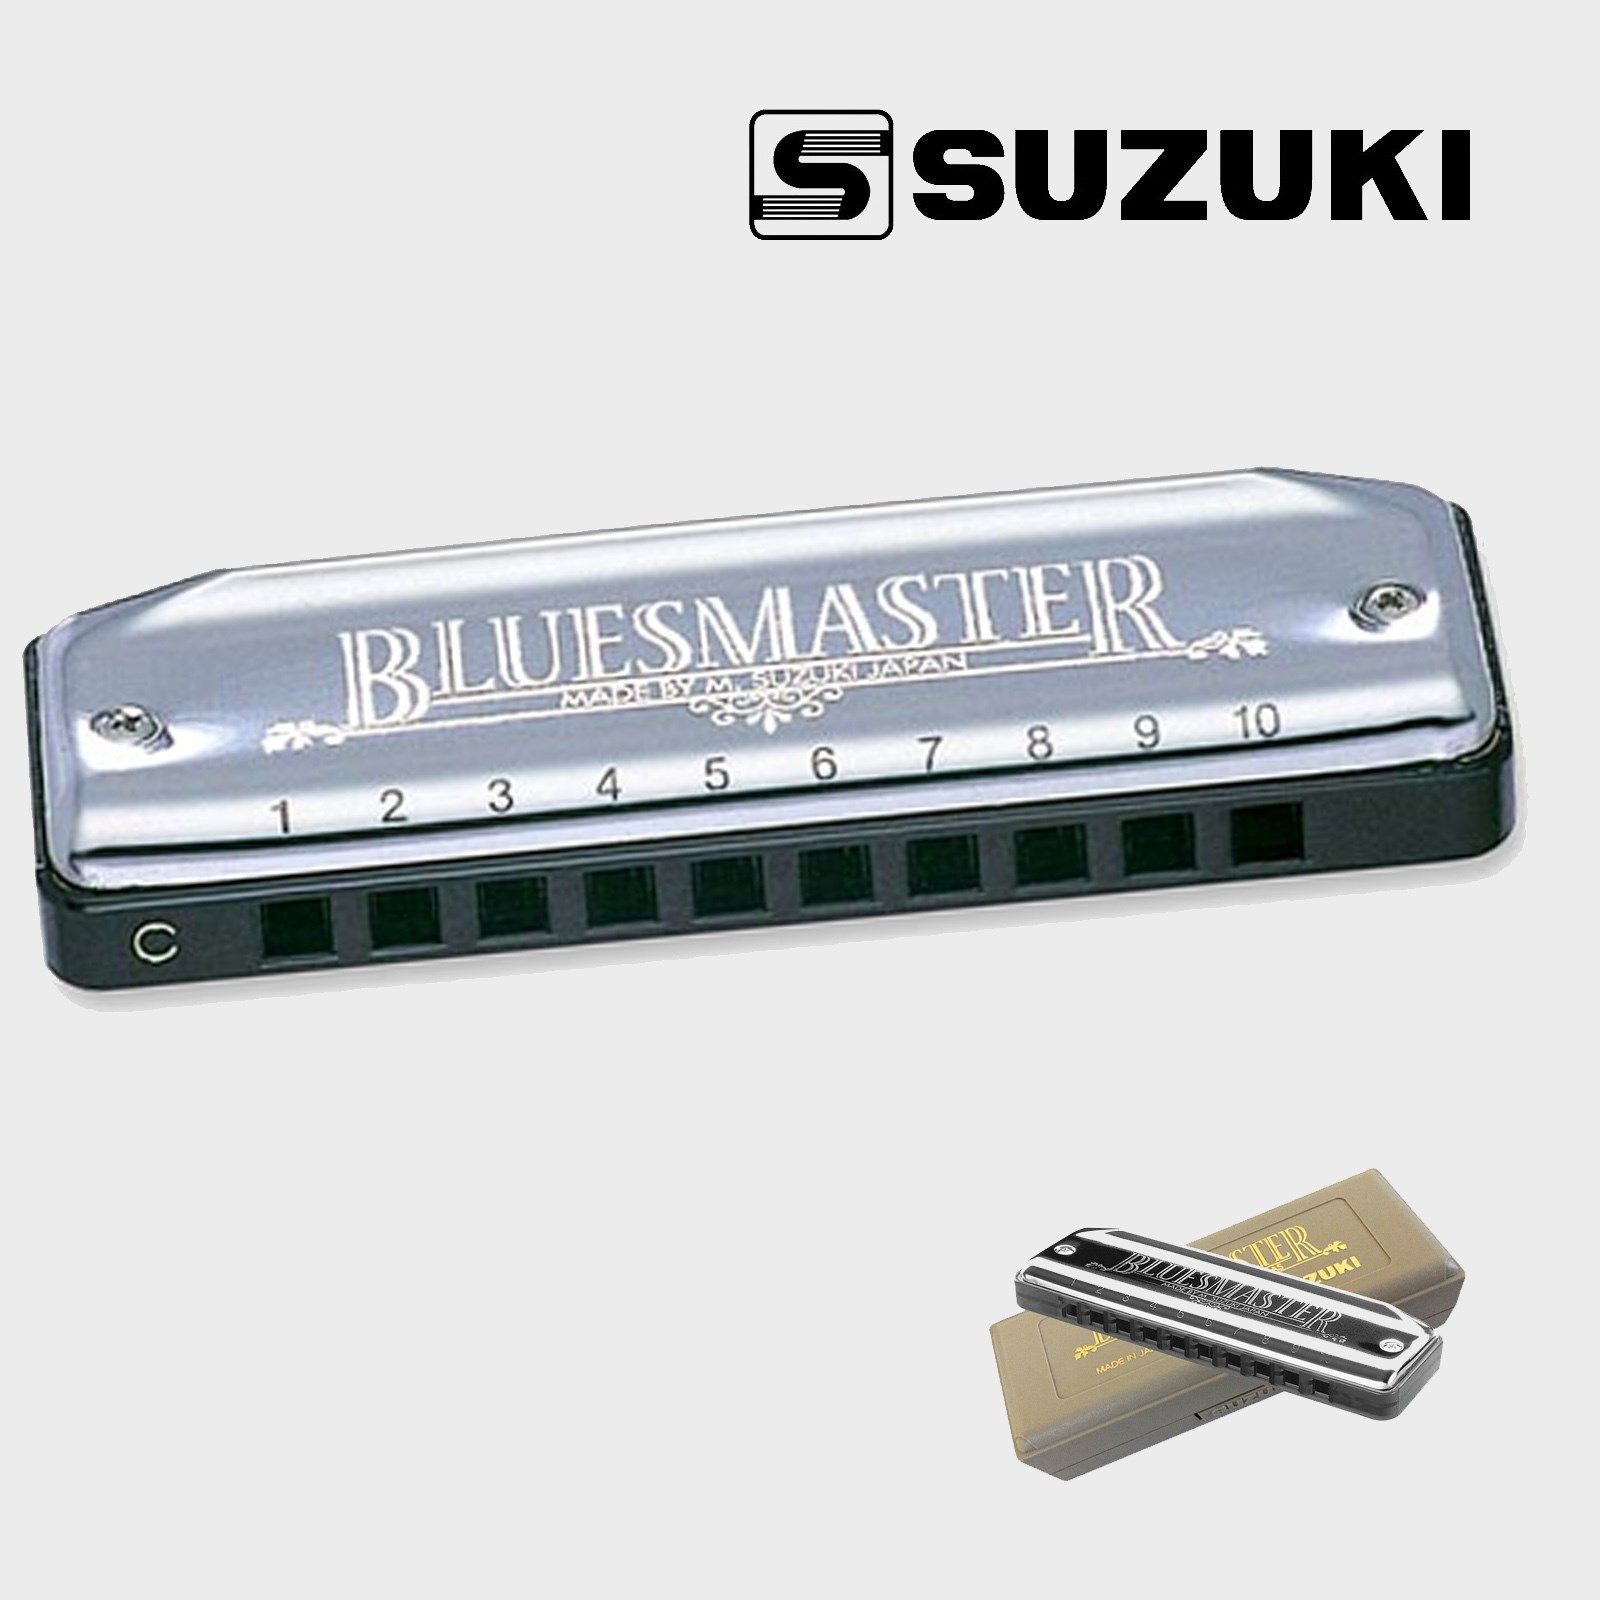 suzuki bluesmaster key of D